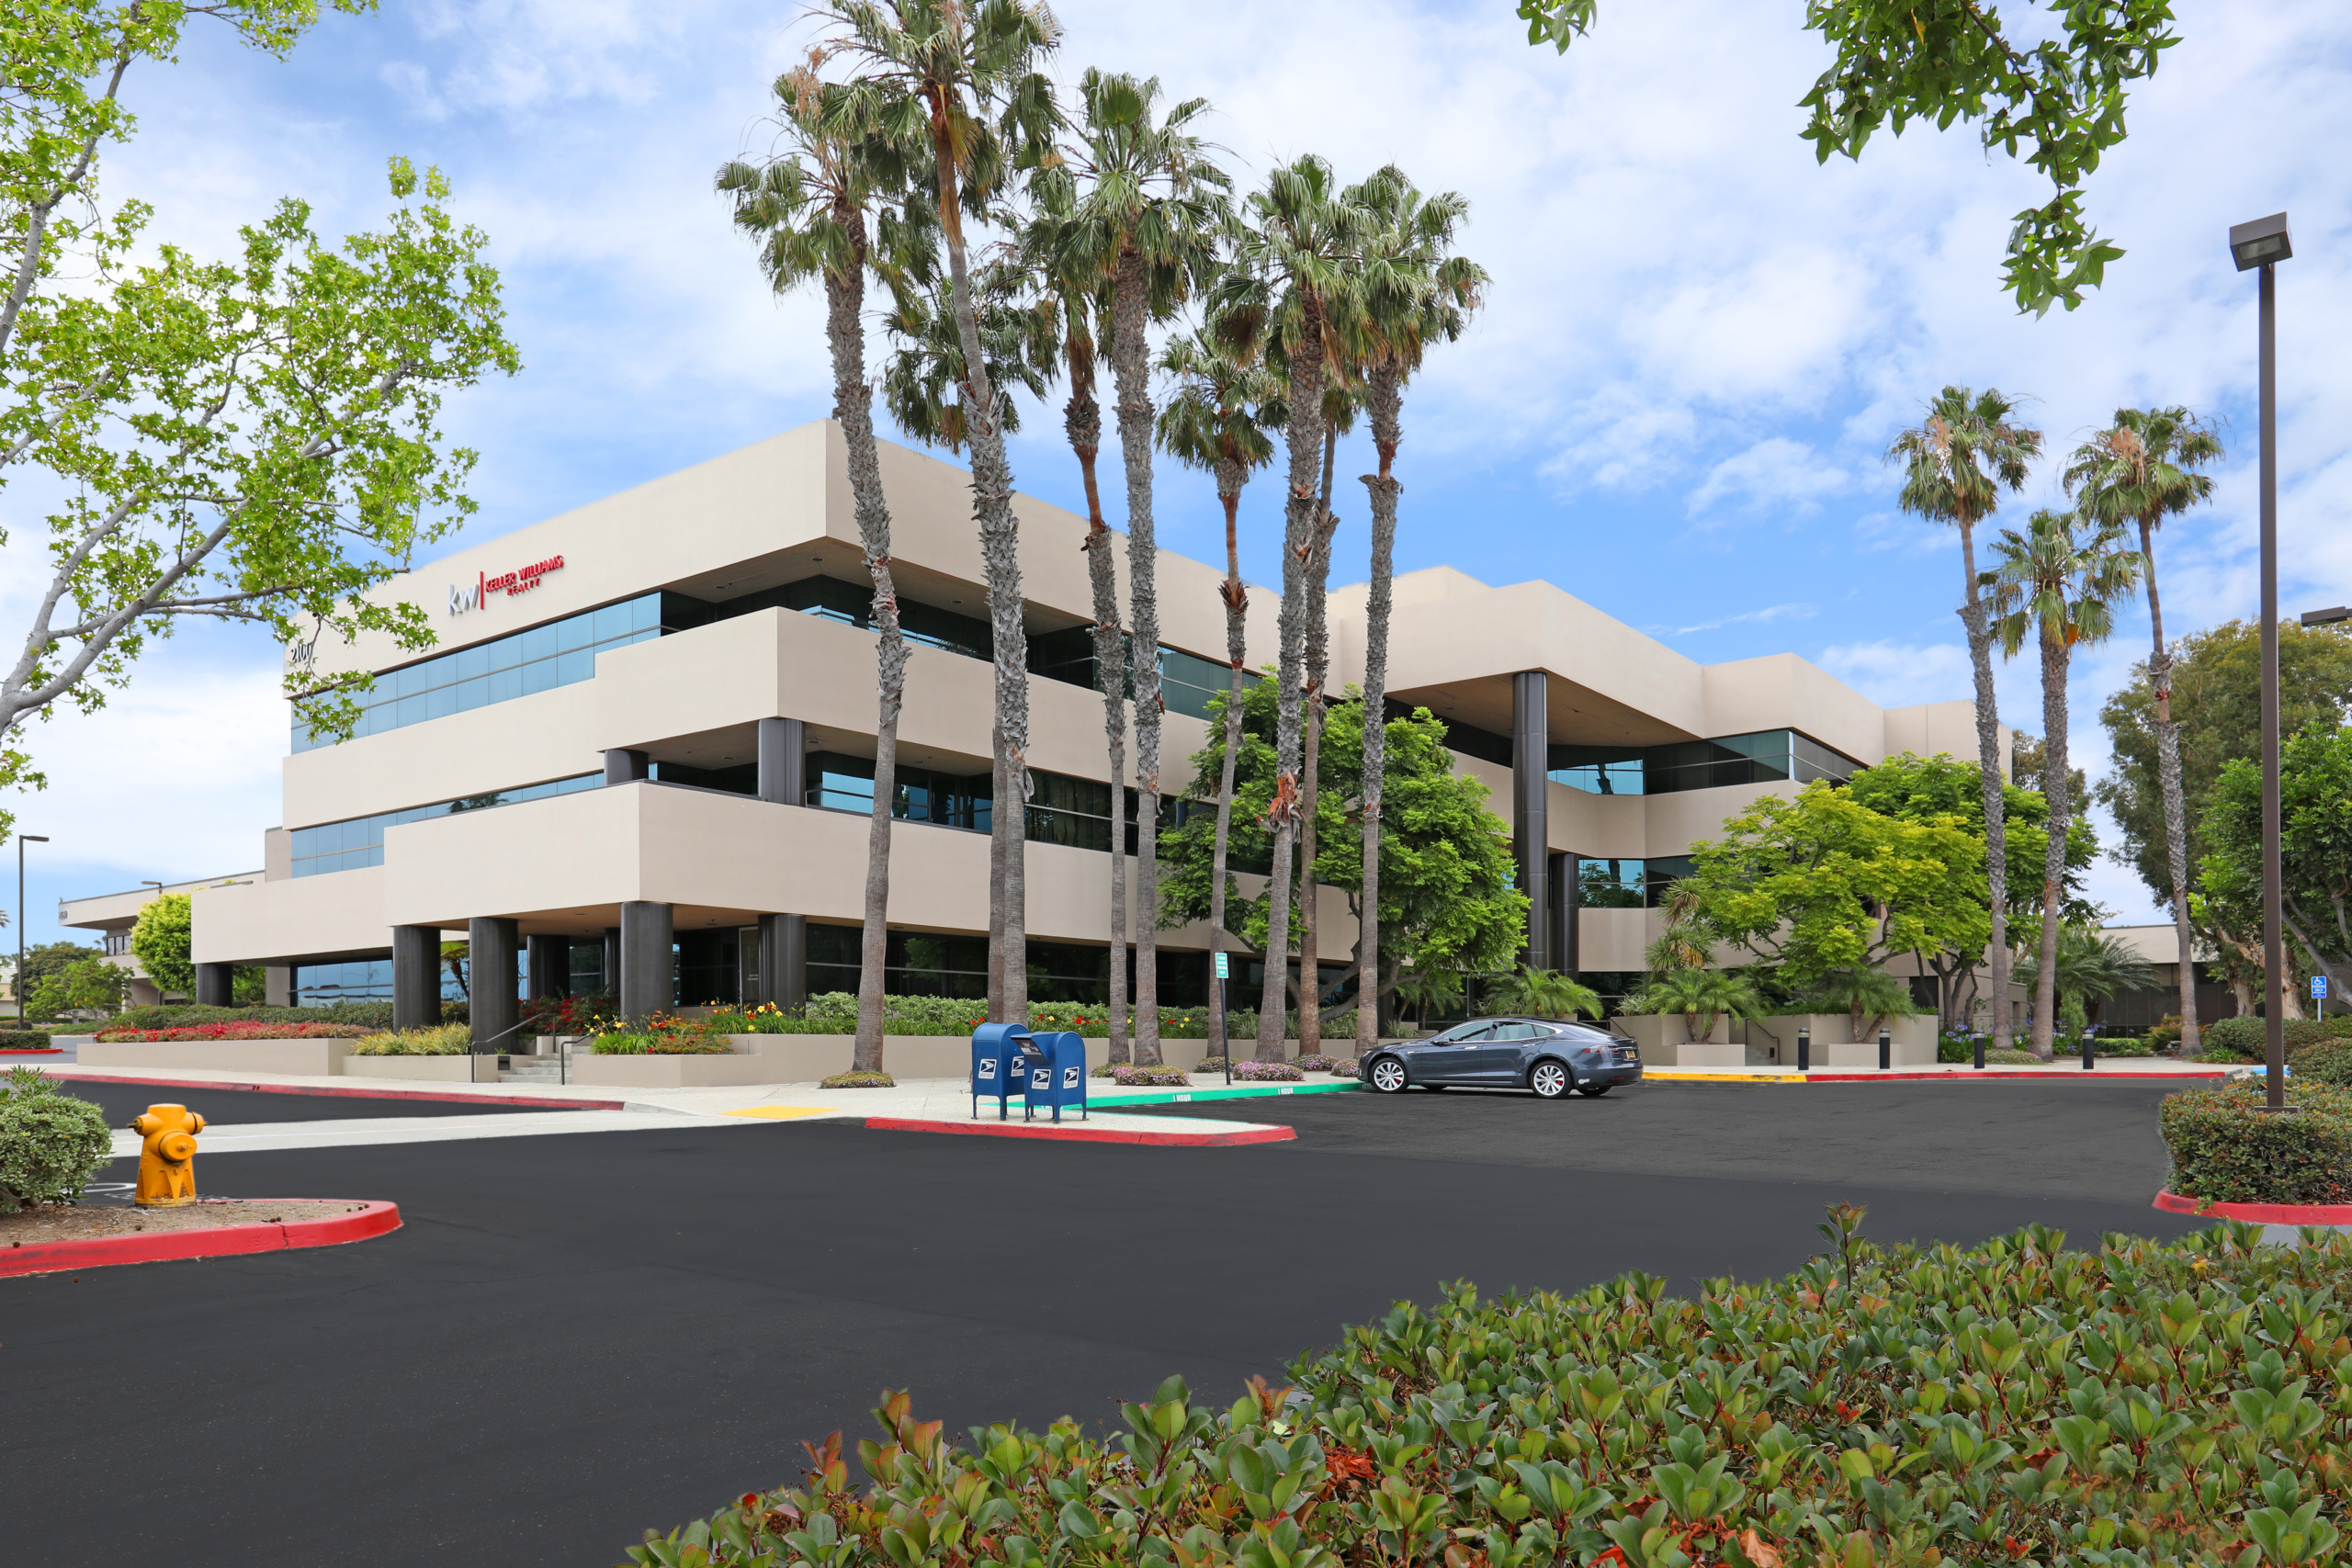 CA seacliff medical plaza – building 2100